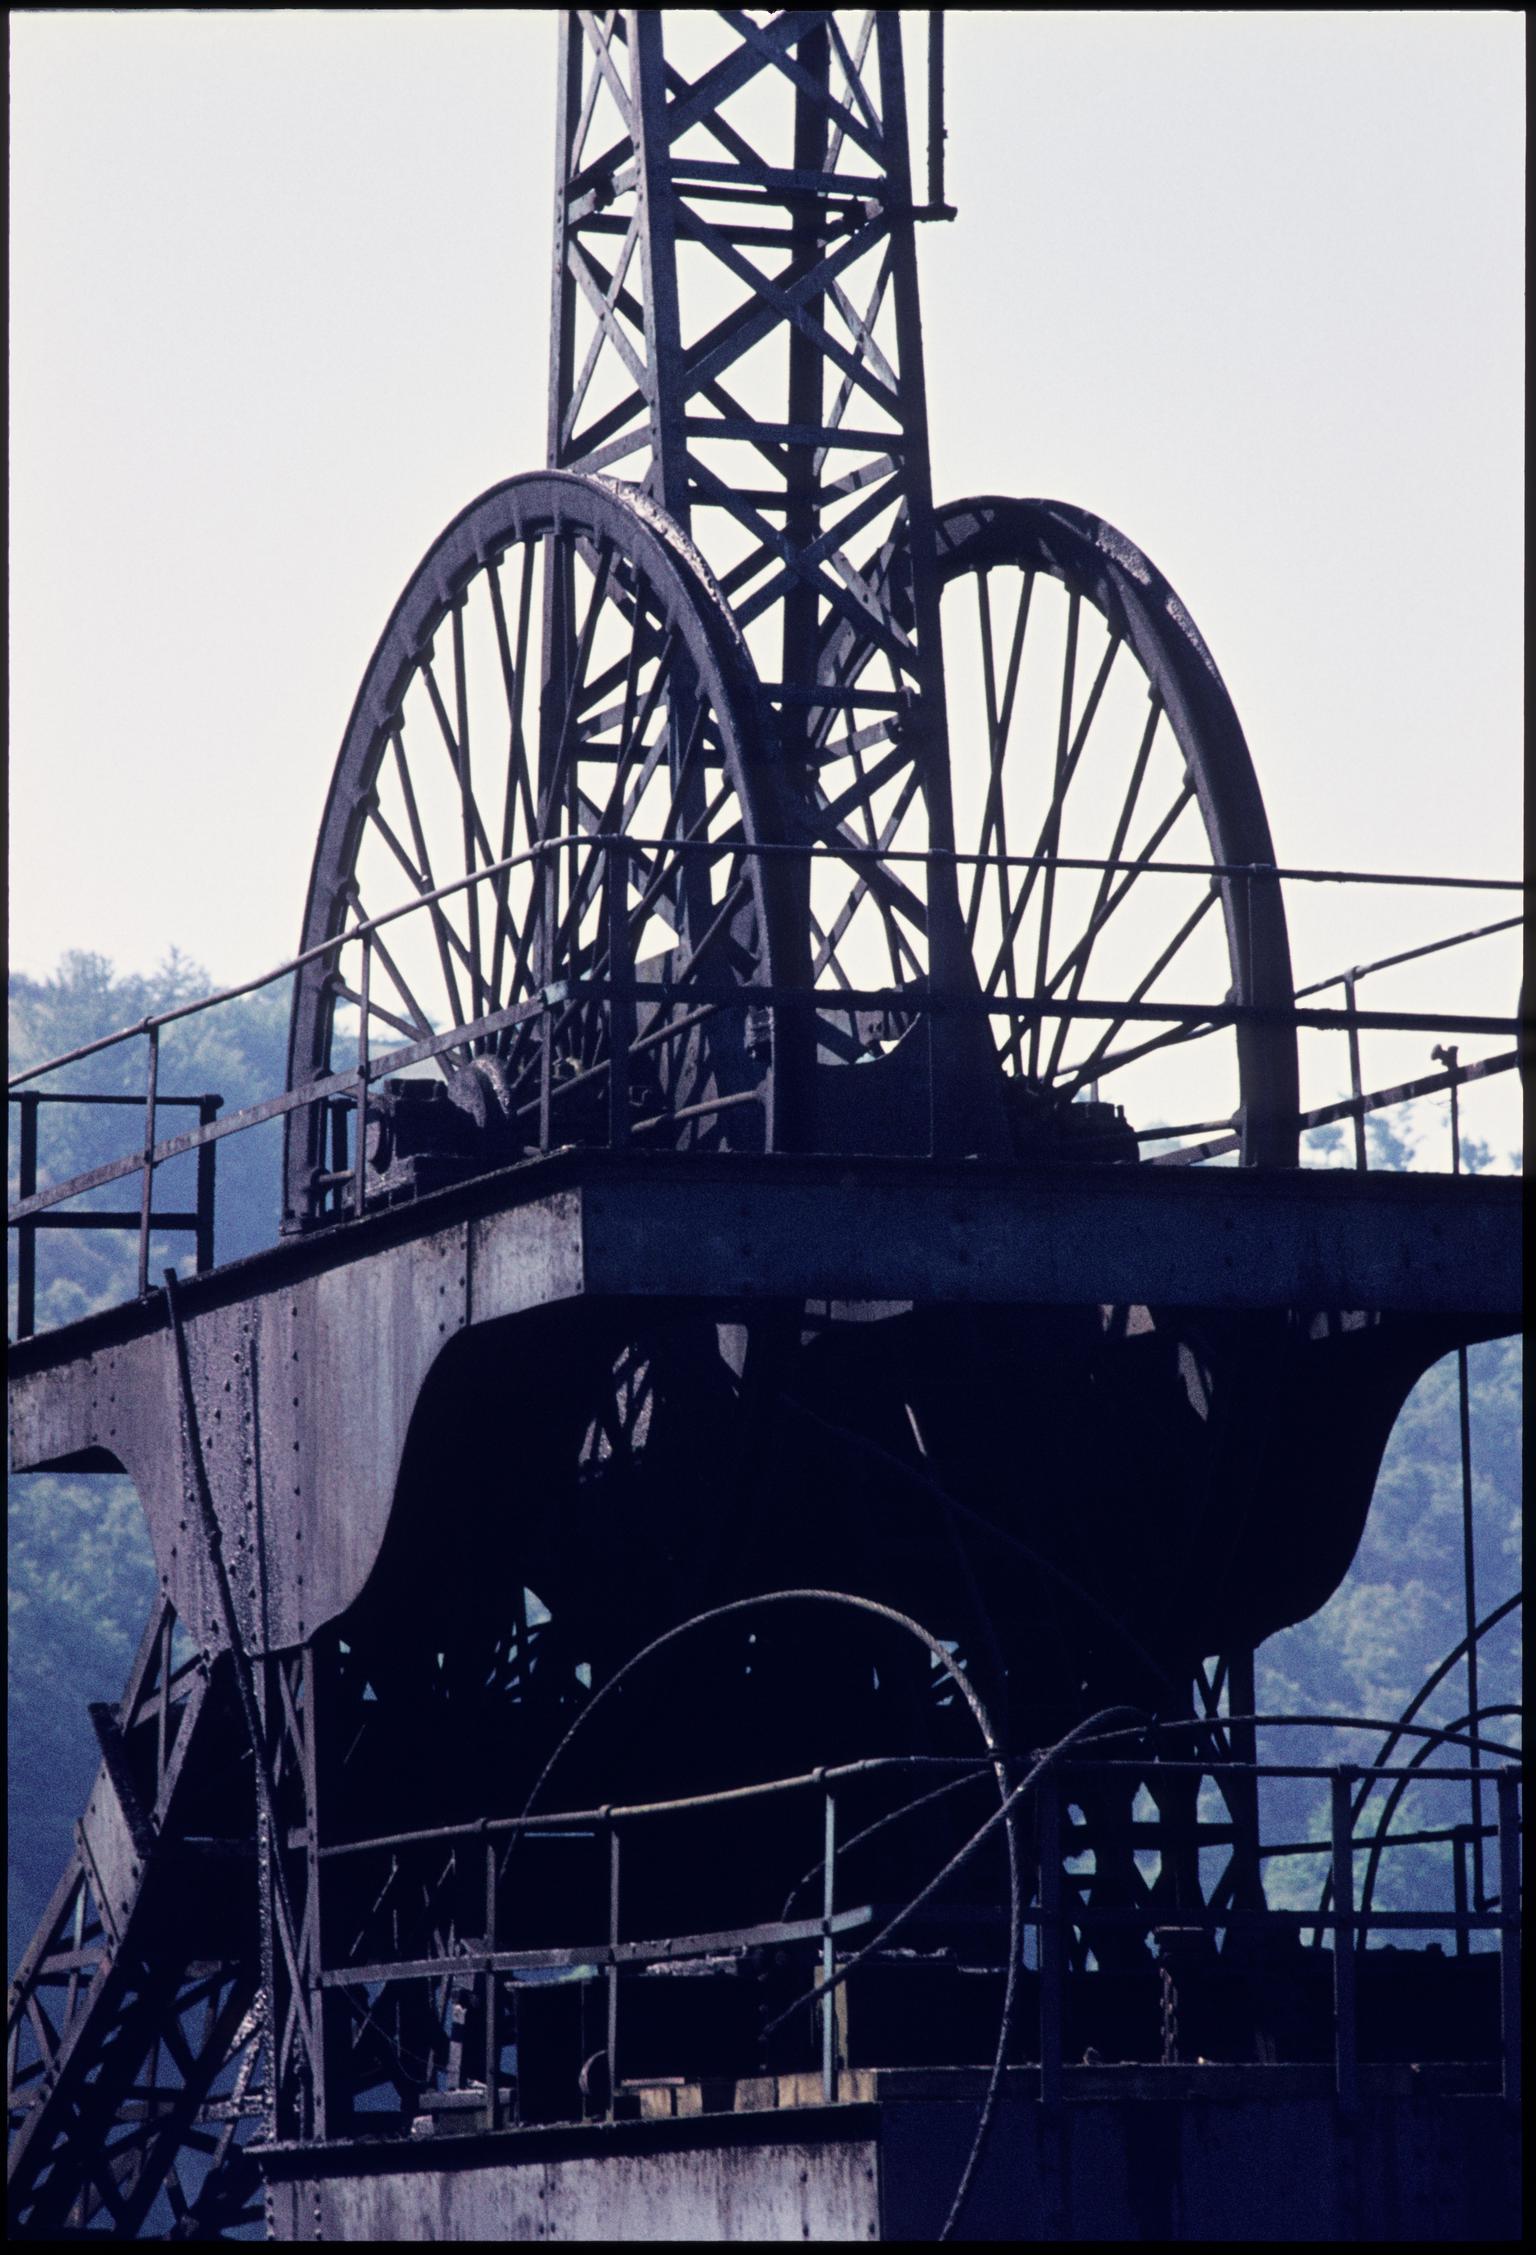 Llanhilleth Colliery, slide